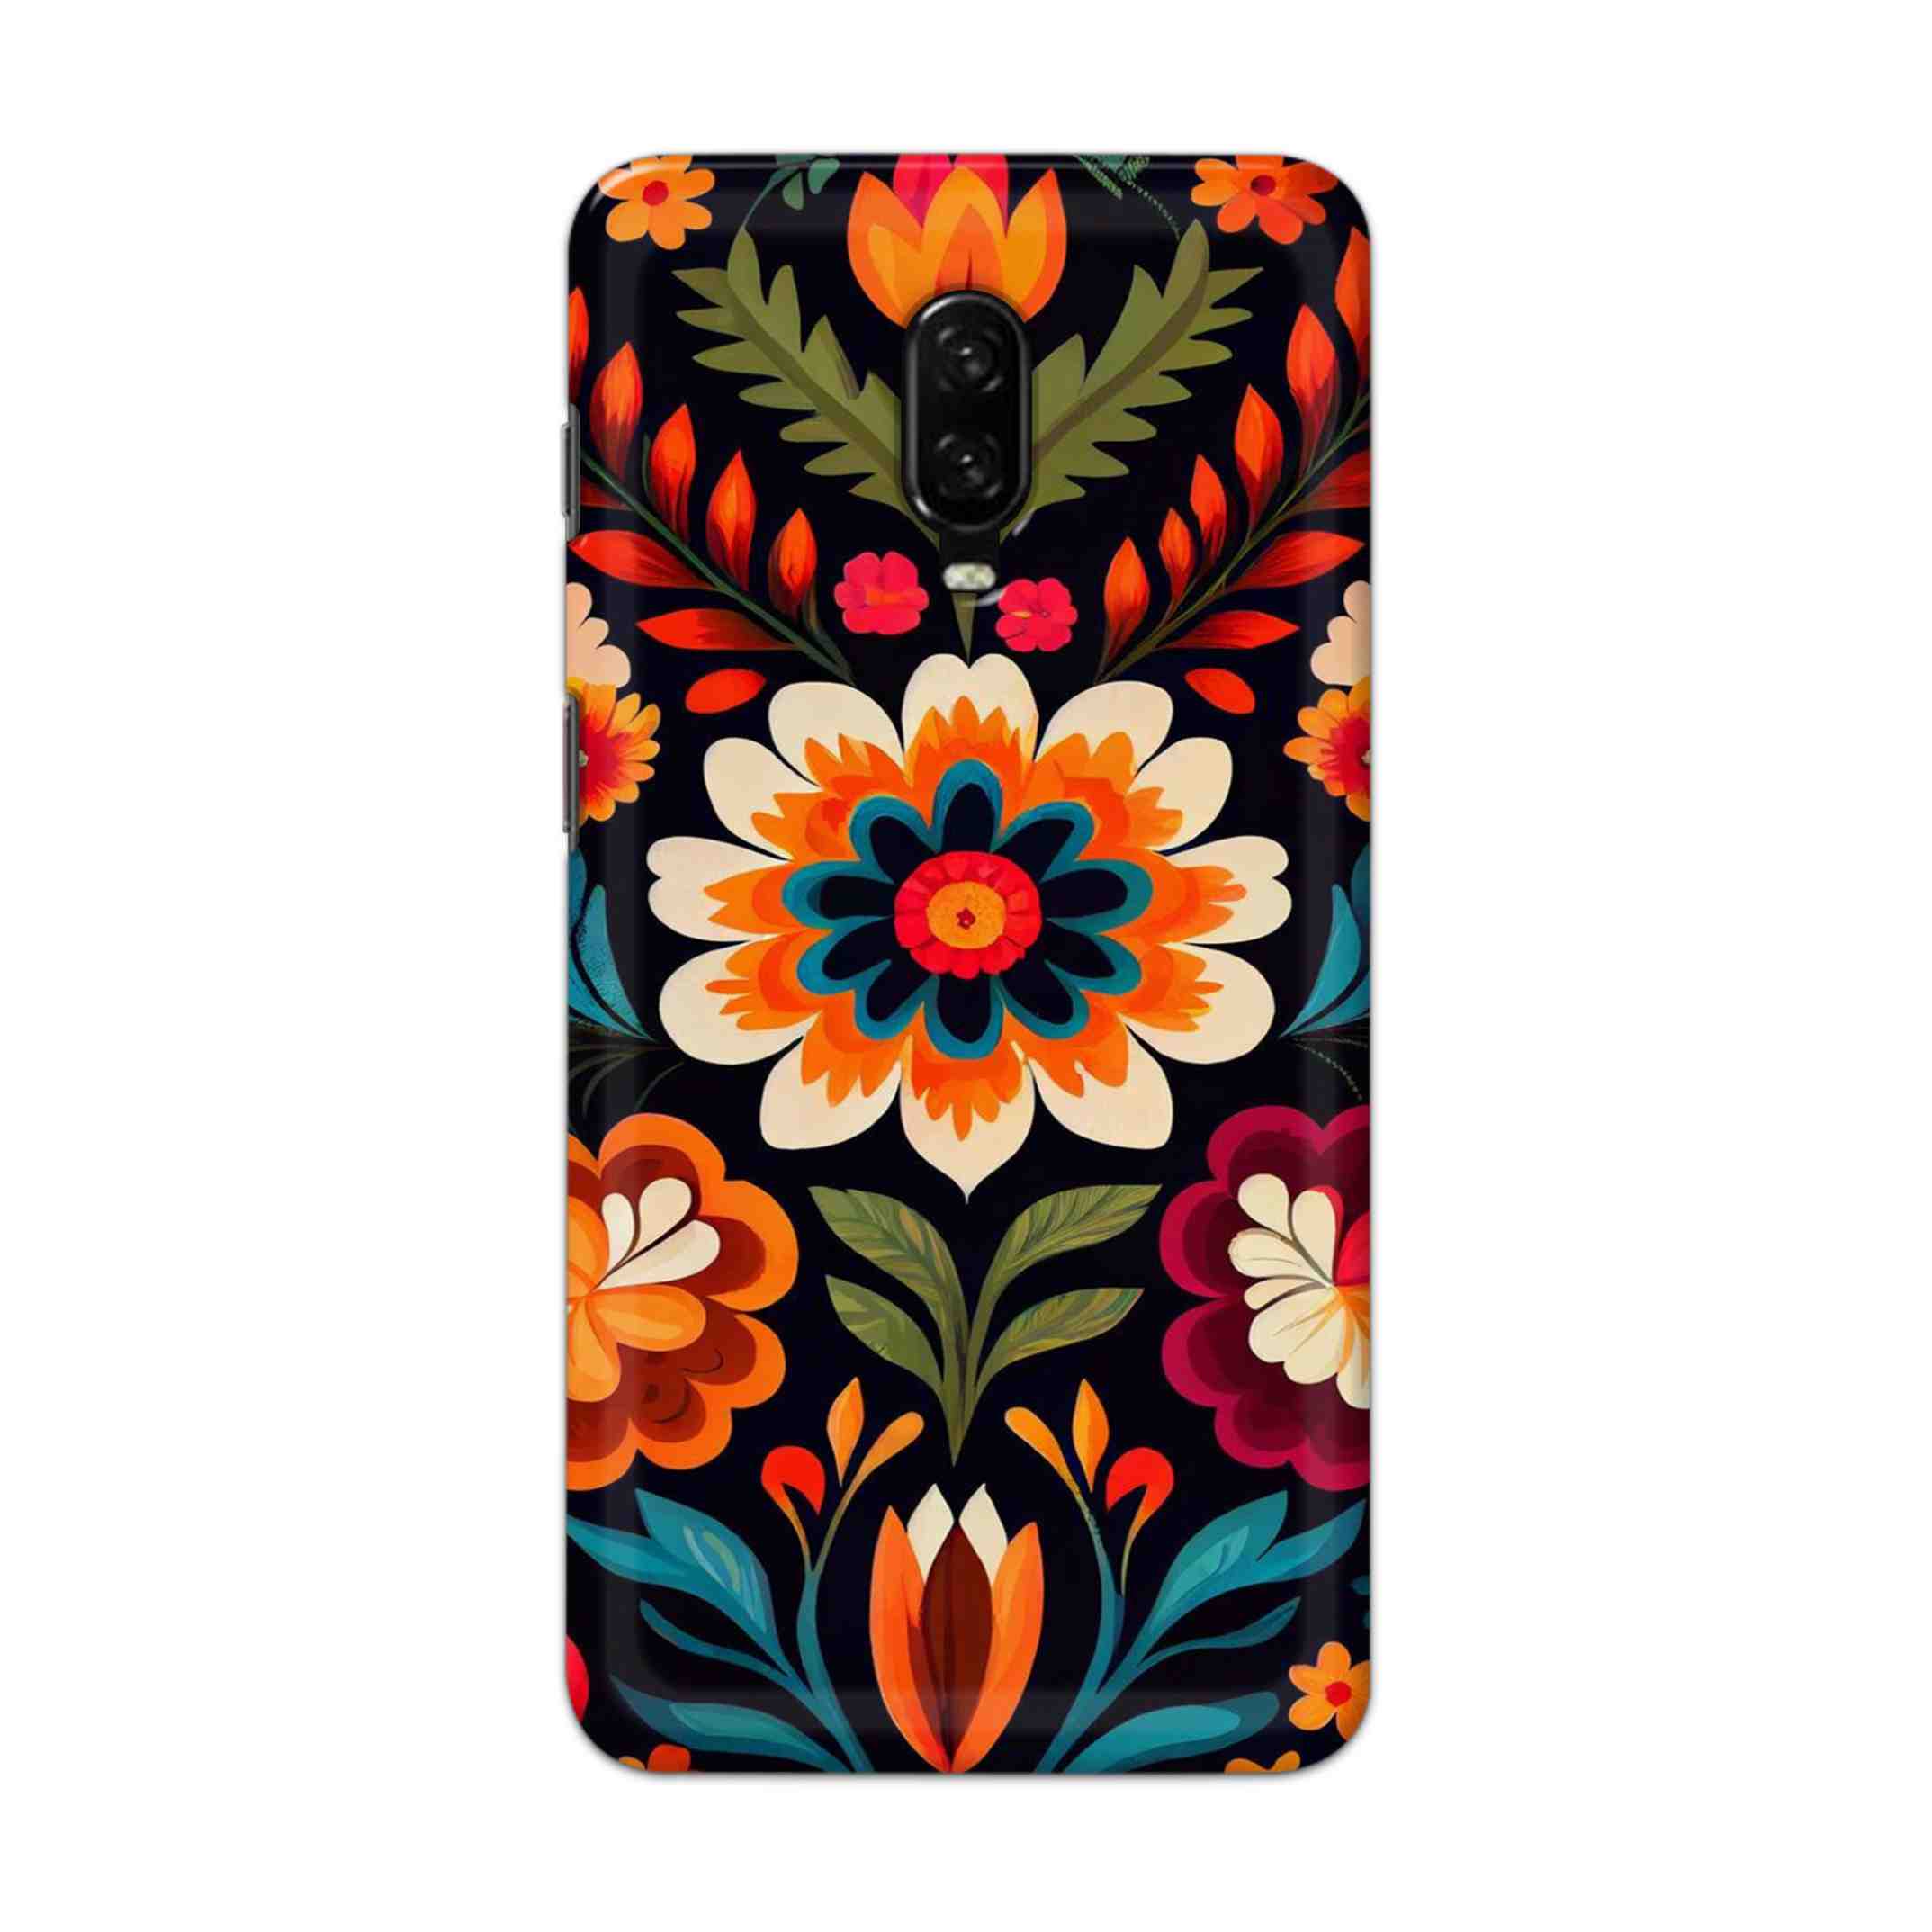 Buy Flower Hard Back Mobile Phone Case Cover For OnePlus 6T Online